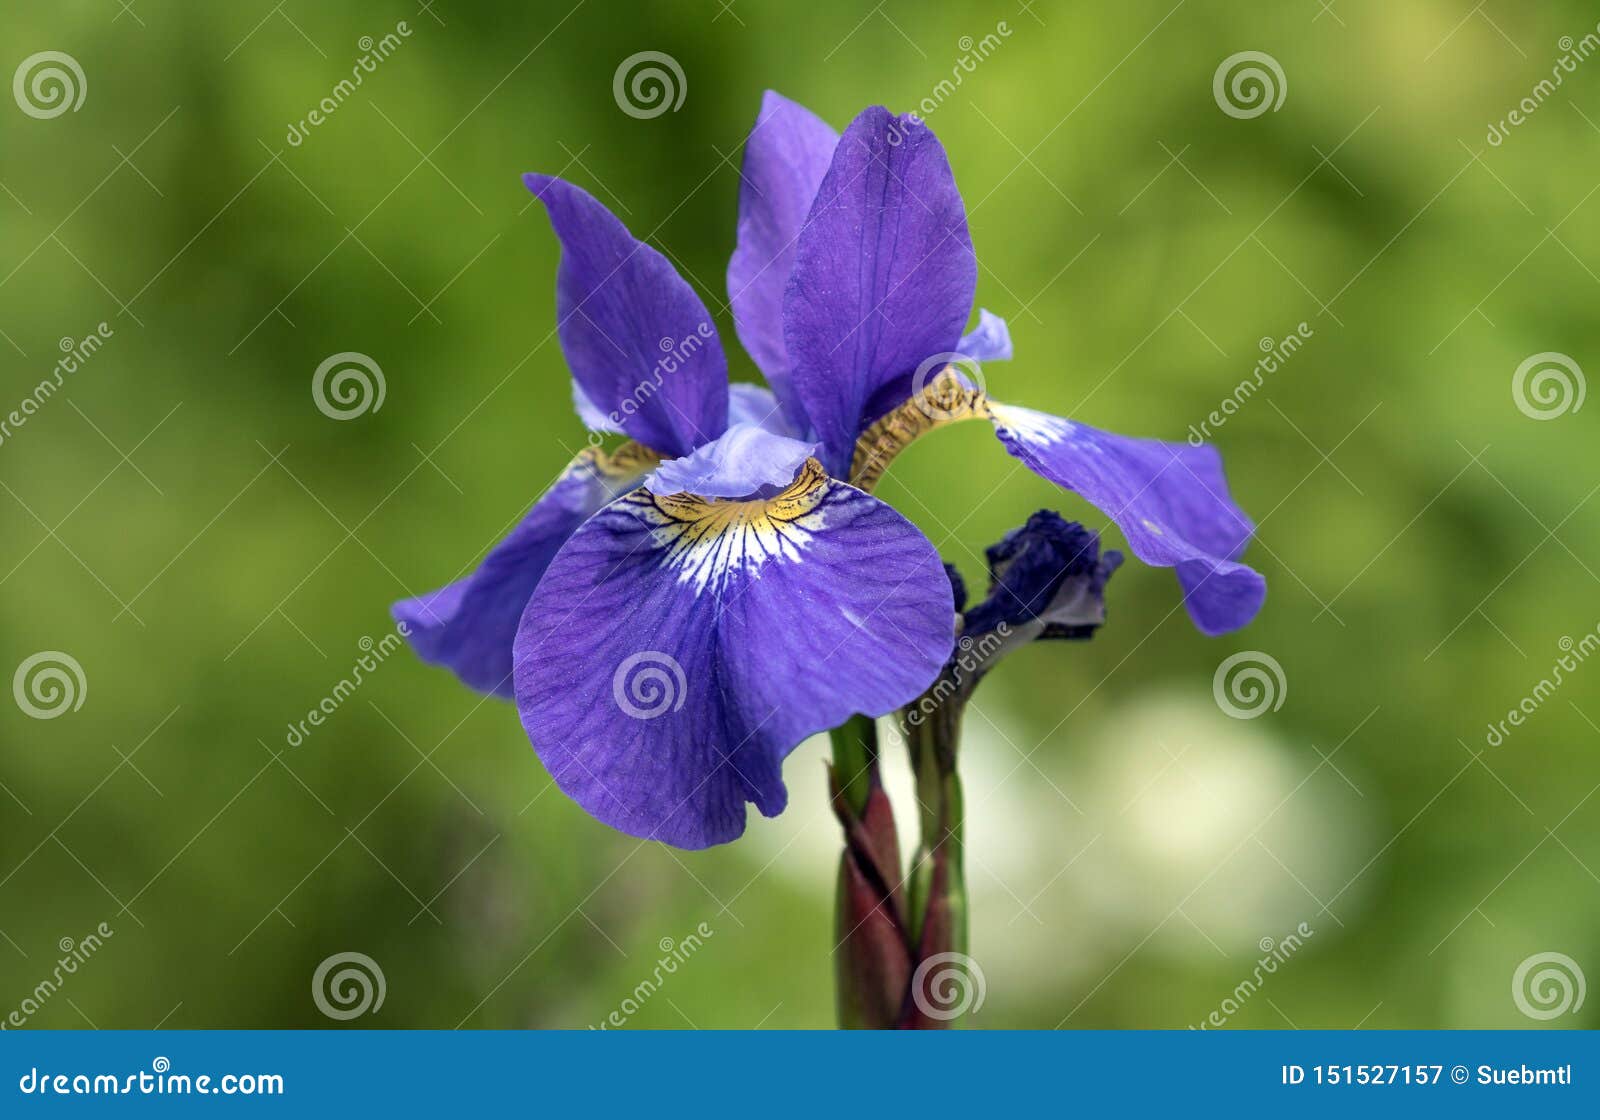 20,20 Iris Flower Closeup Photos   Free & Royalty Free Stock ...